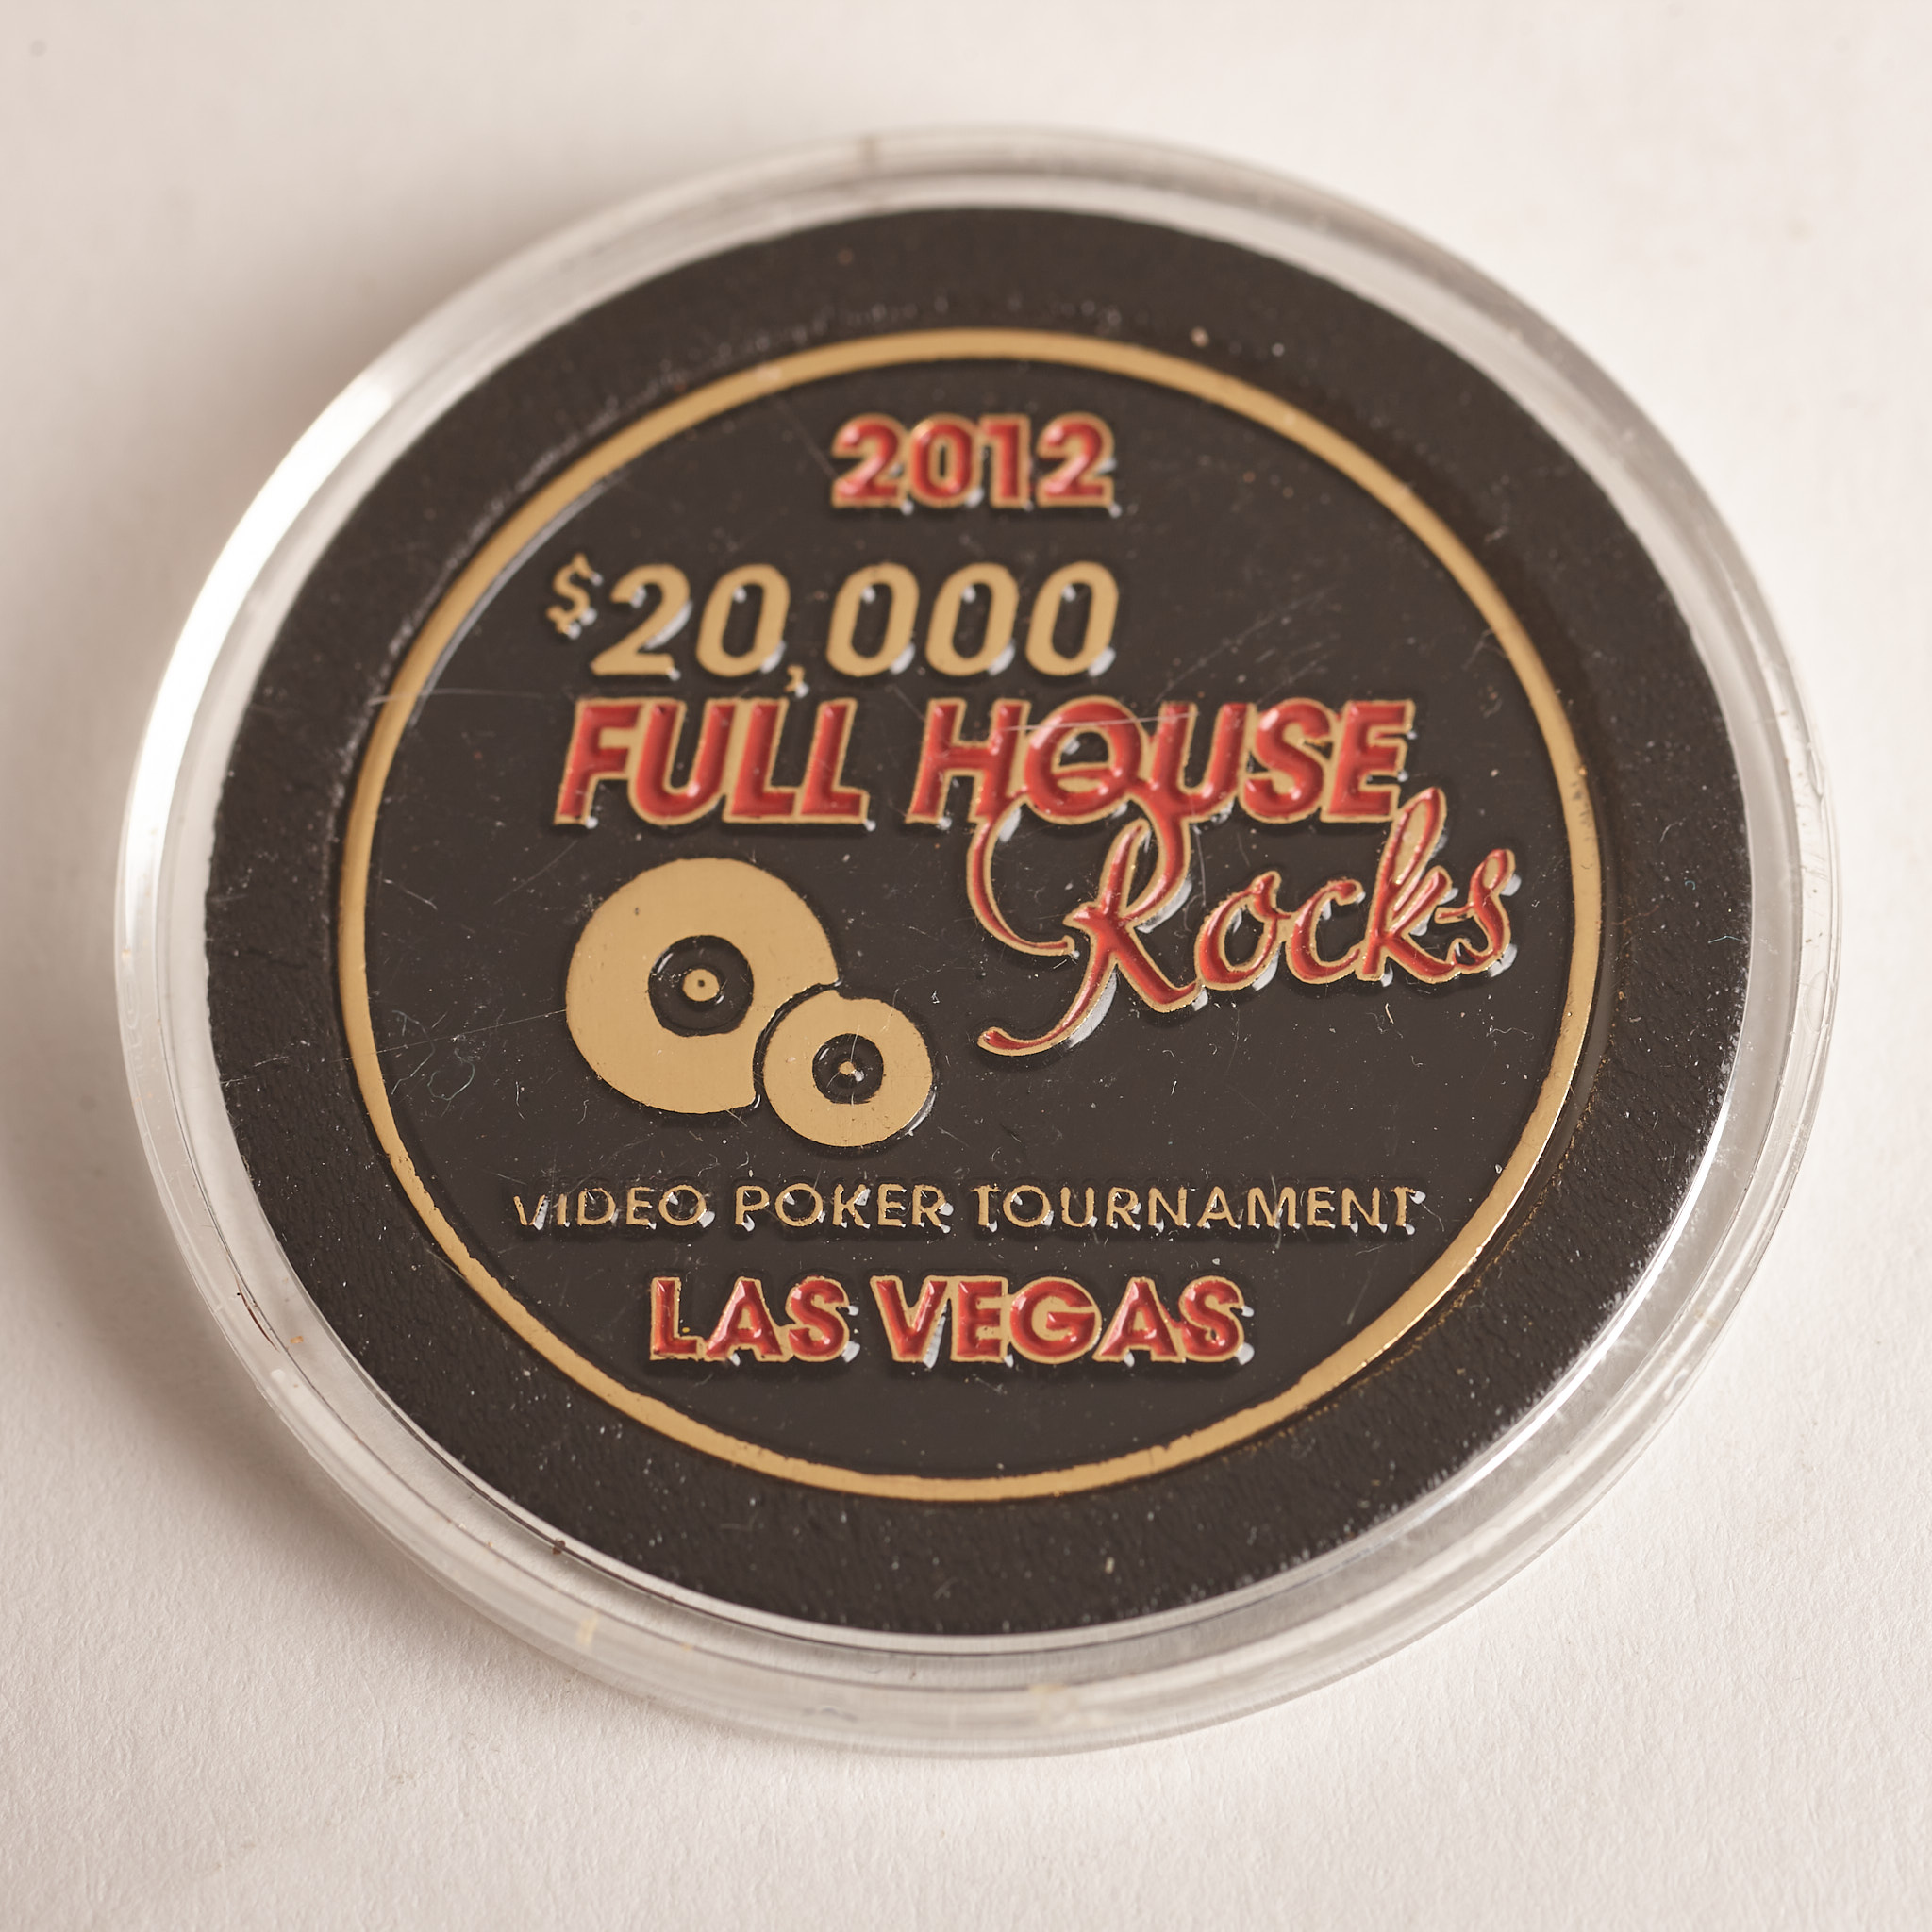 M RESORT CASINO, 2012 $20,000 FULL HOUSE ROCKS, VIDEO POKER TOURNAMENT, LAS VEGAS, Poker Card Guard